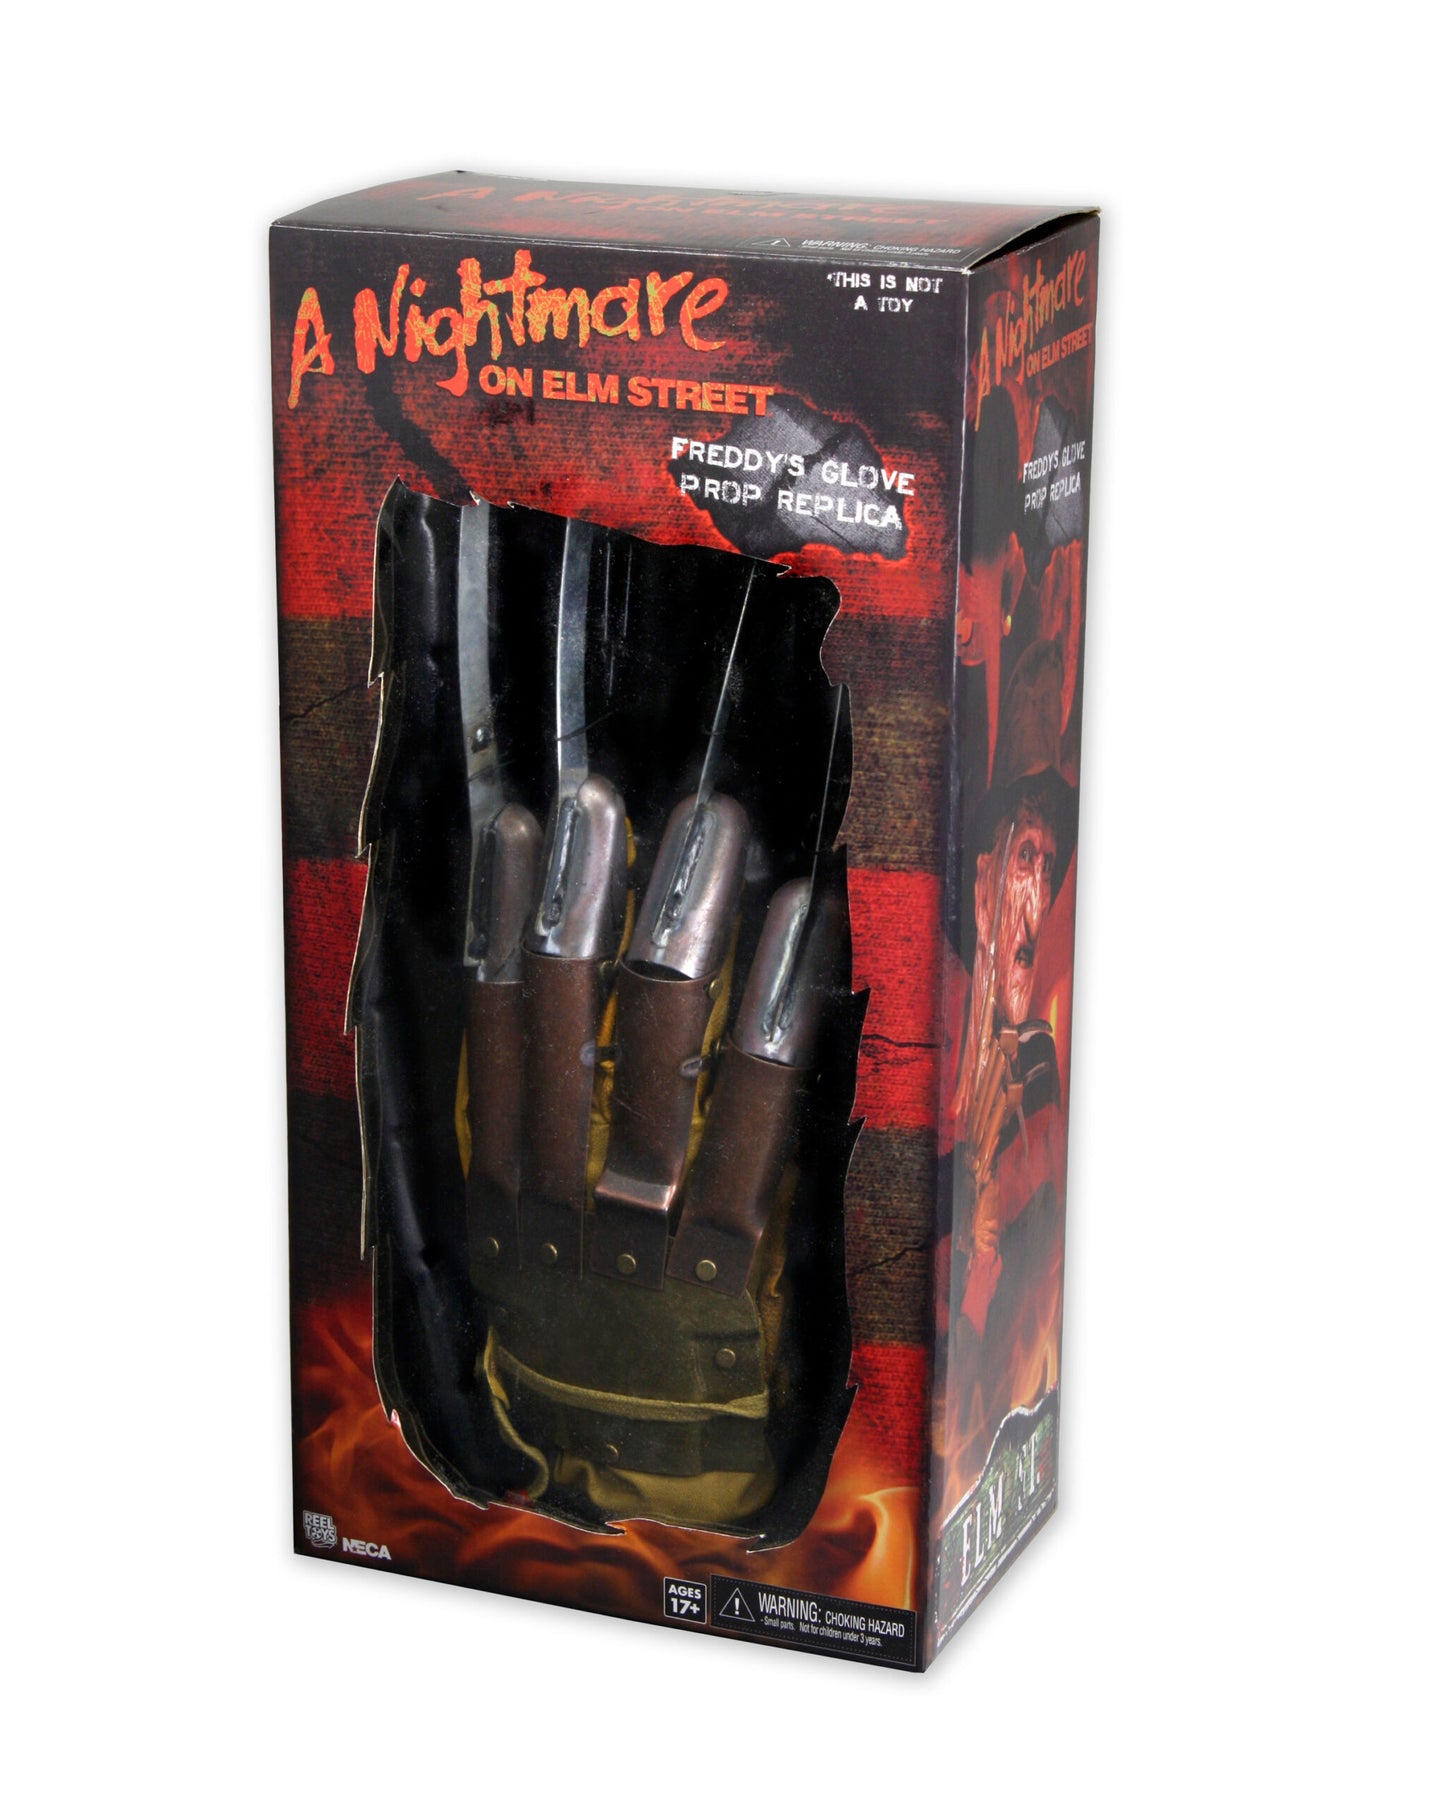 Nightmare on Elm Street (1984) Freddy Krueger Glove Replica - Hyperdrive Collector Zone